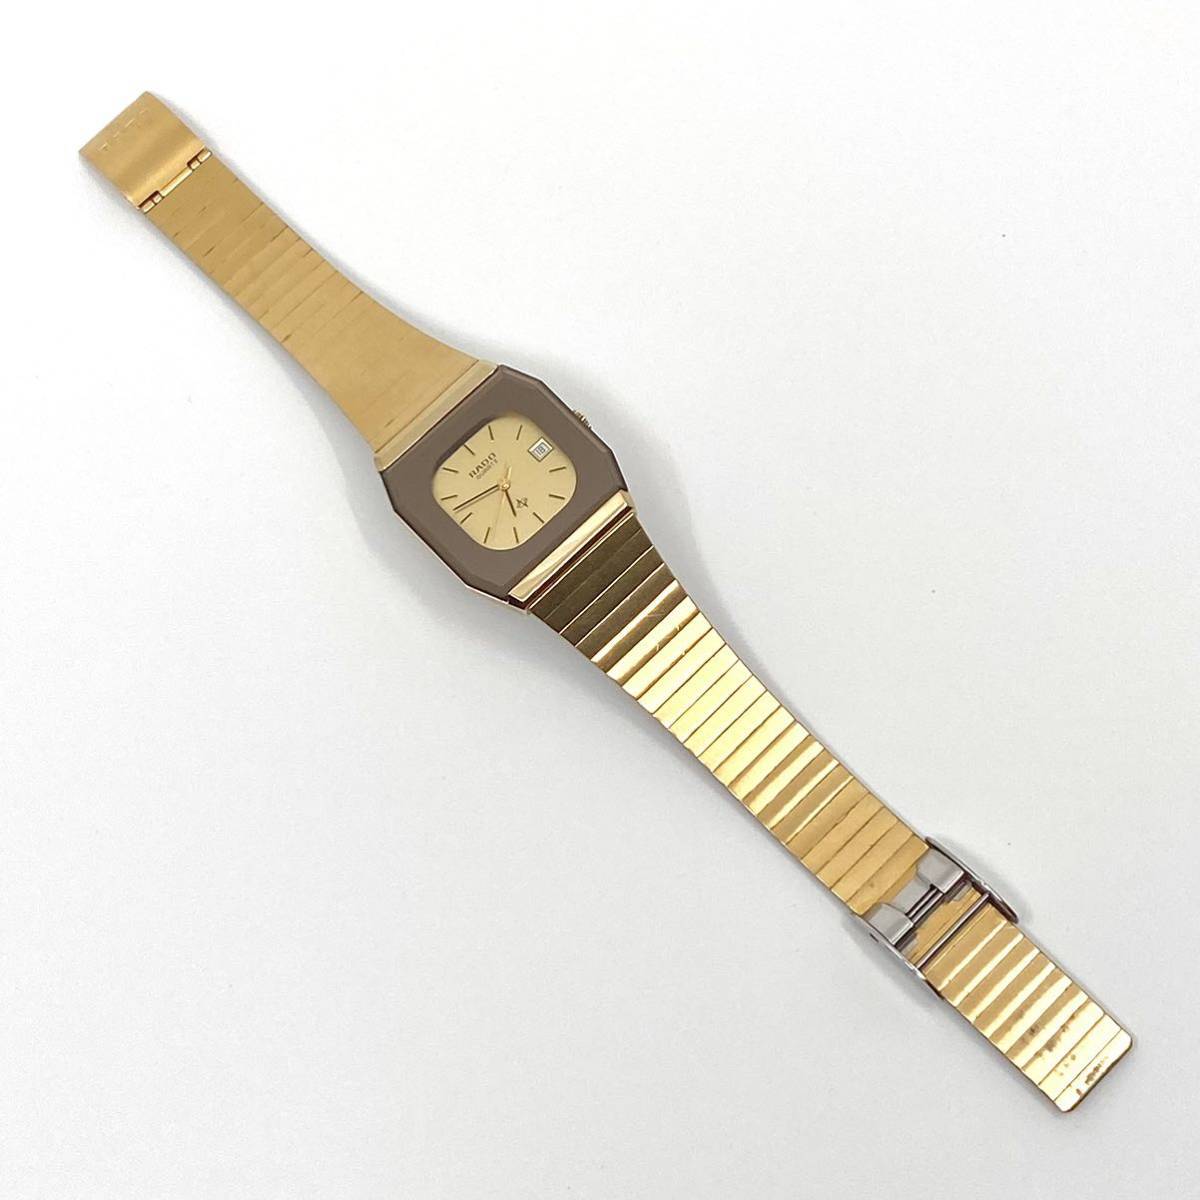 RADO 腕時計 クォーツ quartz Swiss スイス製 デイト バーインデックス 3針 ゴールド 金 ラドー D30_画像6